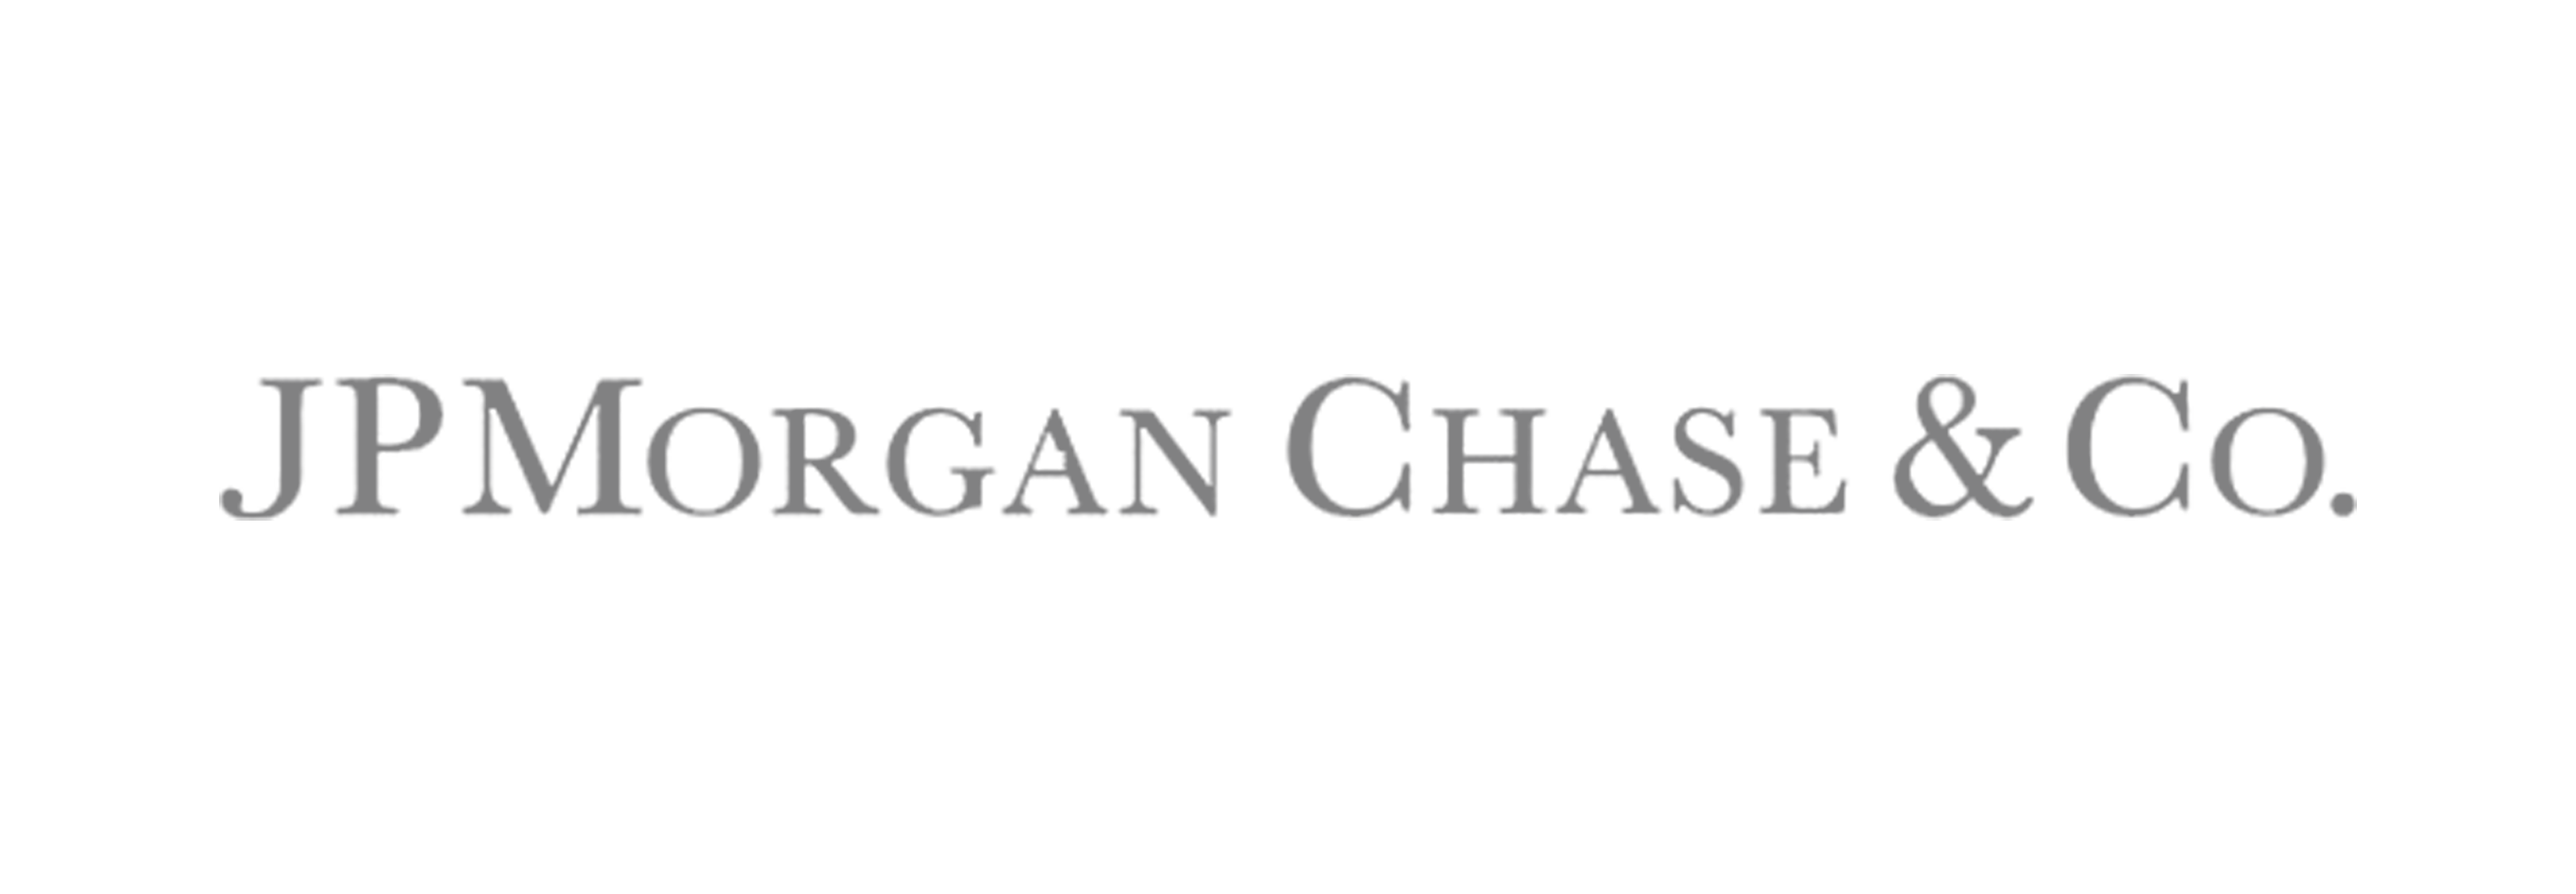 JPM Chase logo